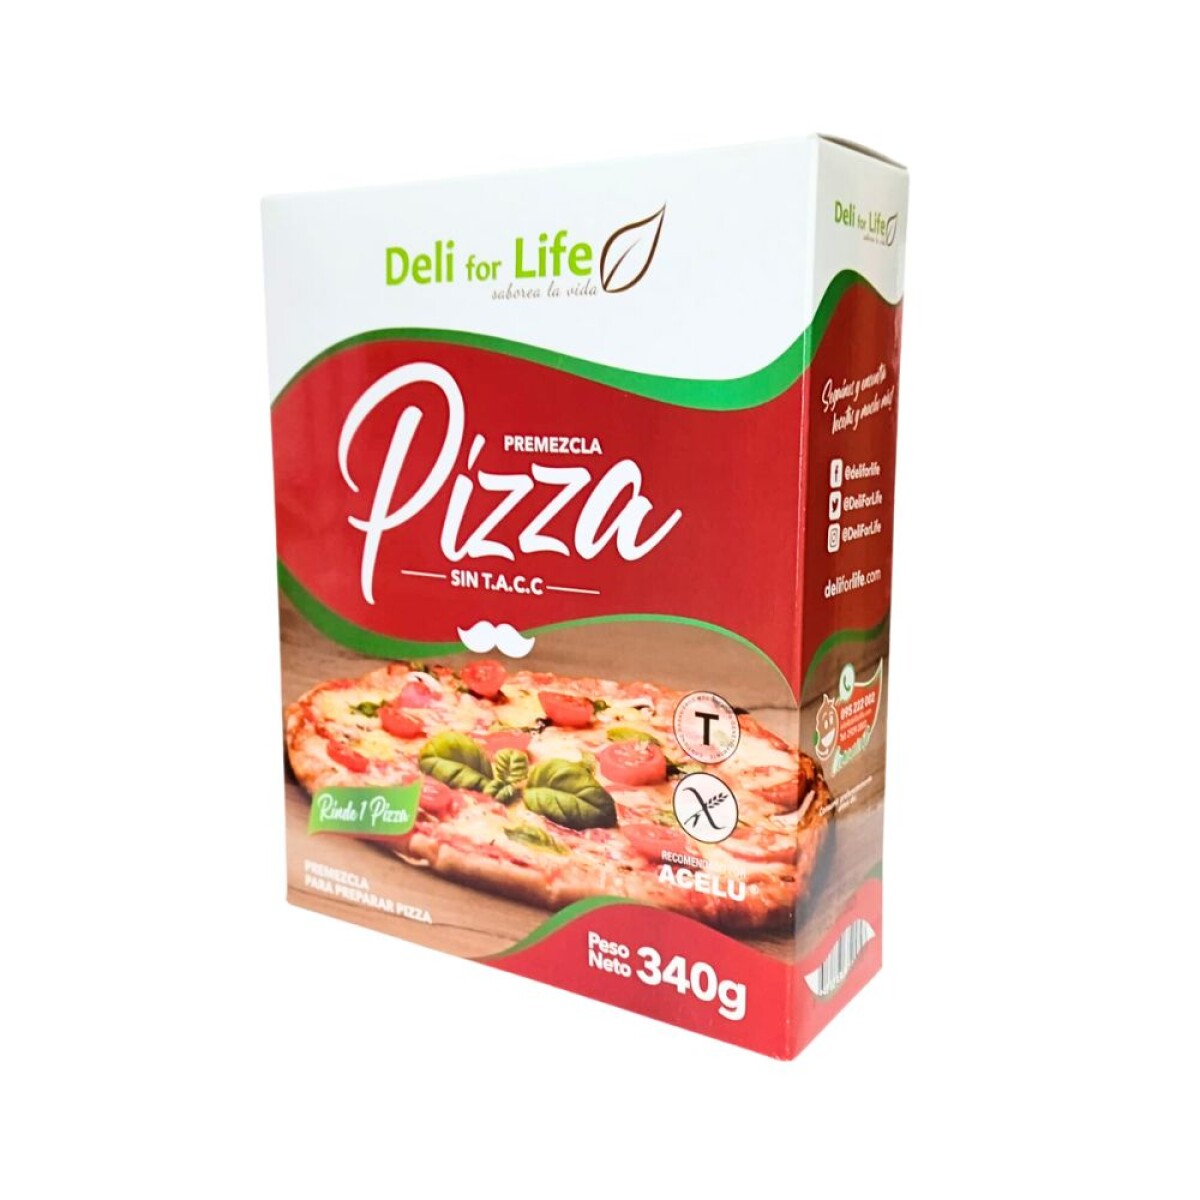 Pre-Mezcla para Pizza Deli for Life 340g 